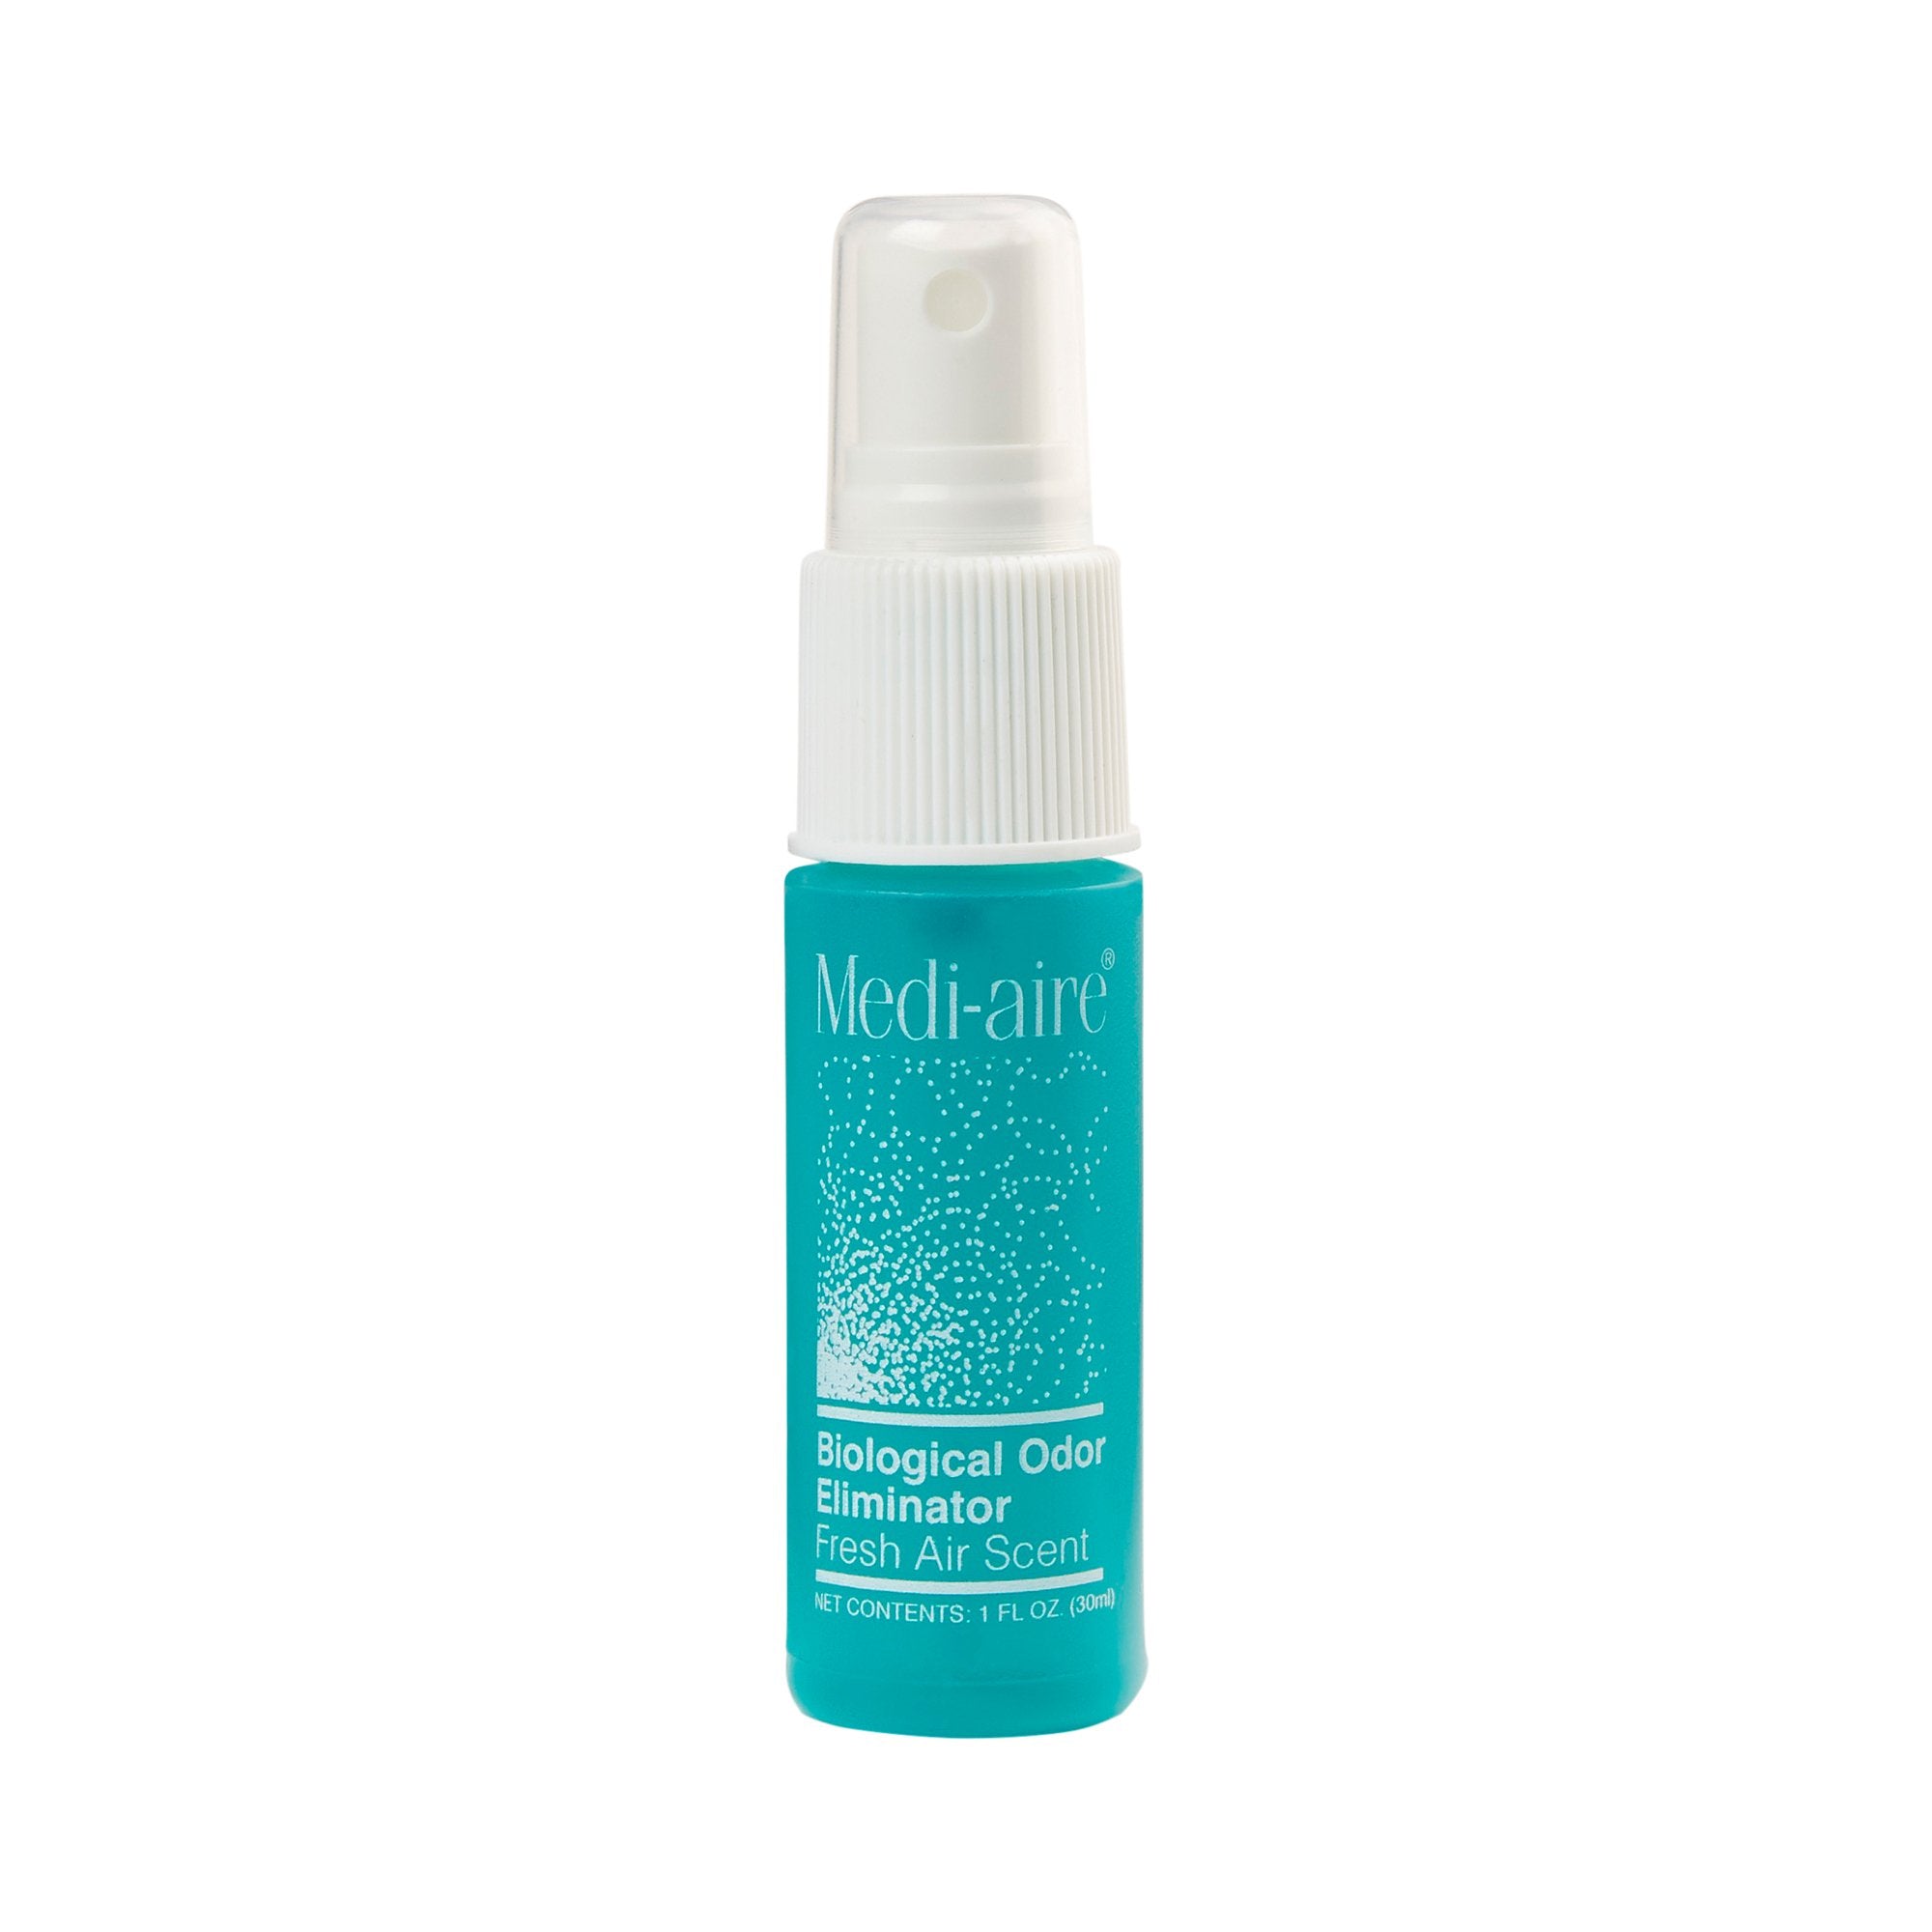 Deodorizer Medi-aire Biological Odor Eliminator Liquid 1 oz. Bottle Fresh Air Scent